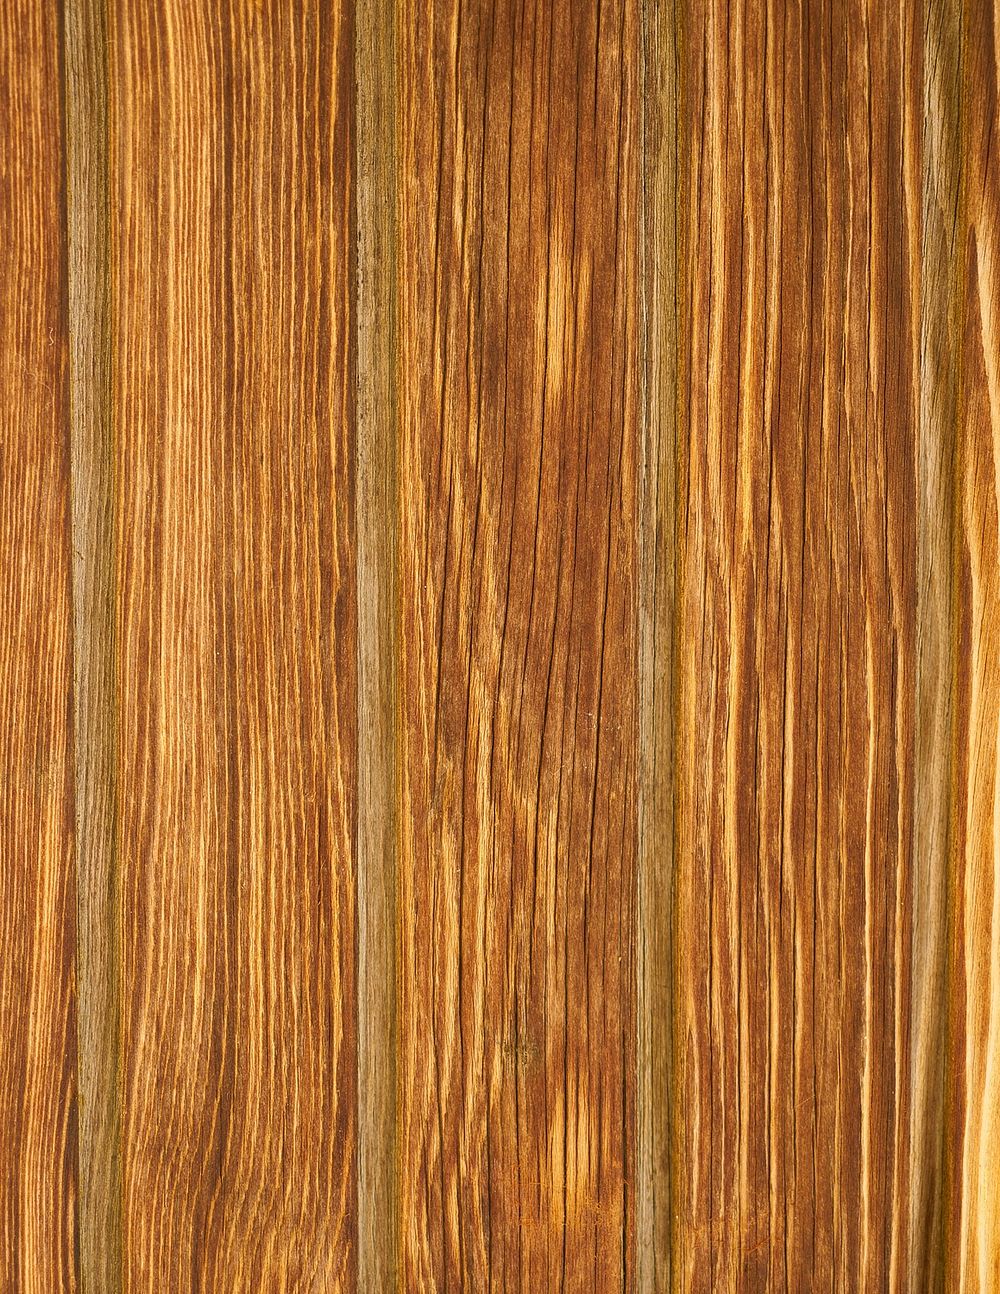 Brown wooden floor background, close up design